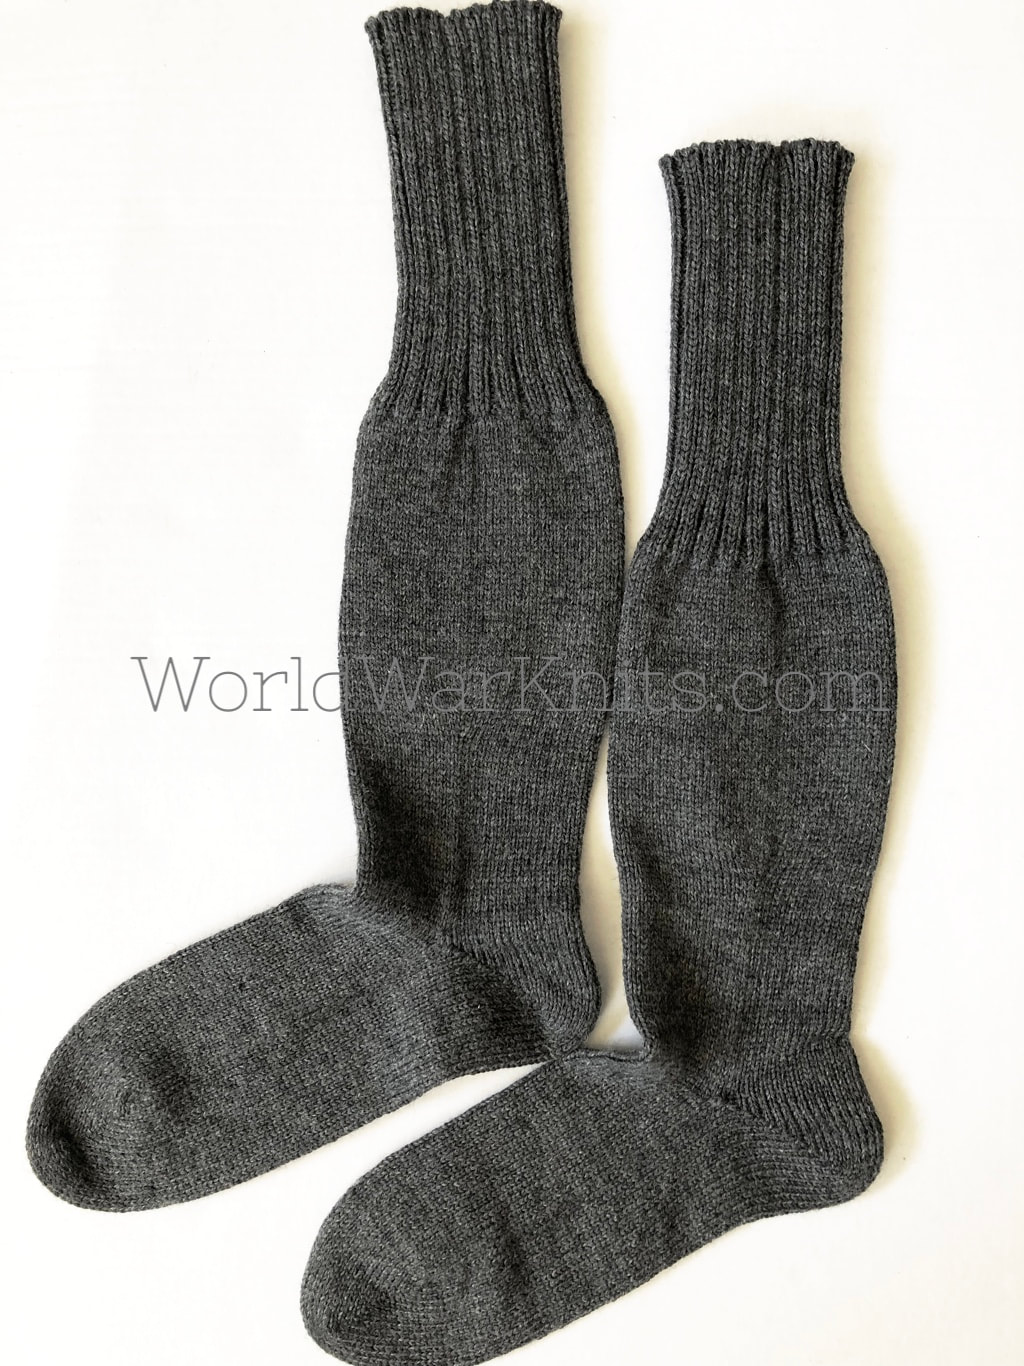 WWI Seaman’s Stockings. Great War Knitted Stockings. 